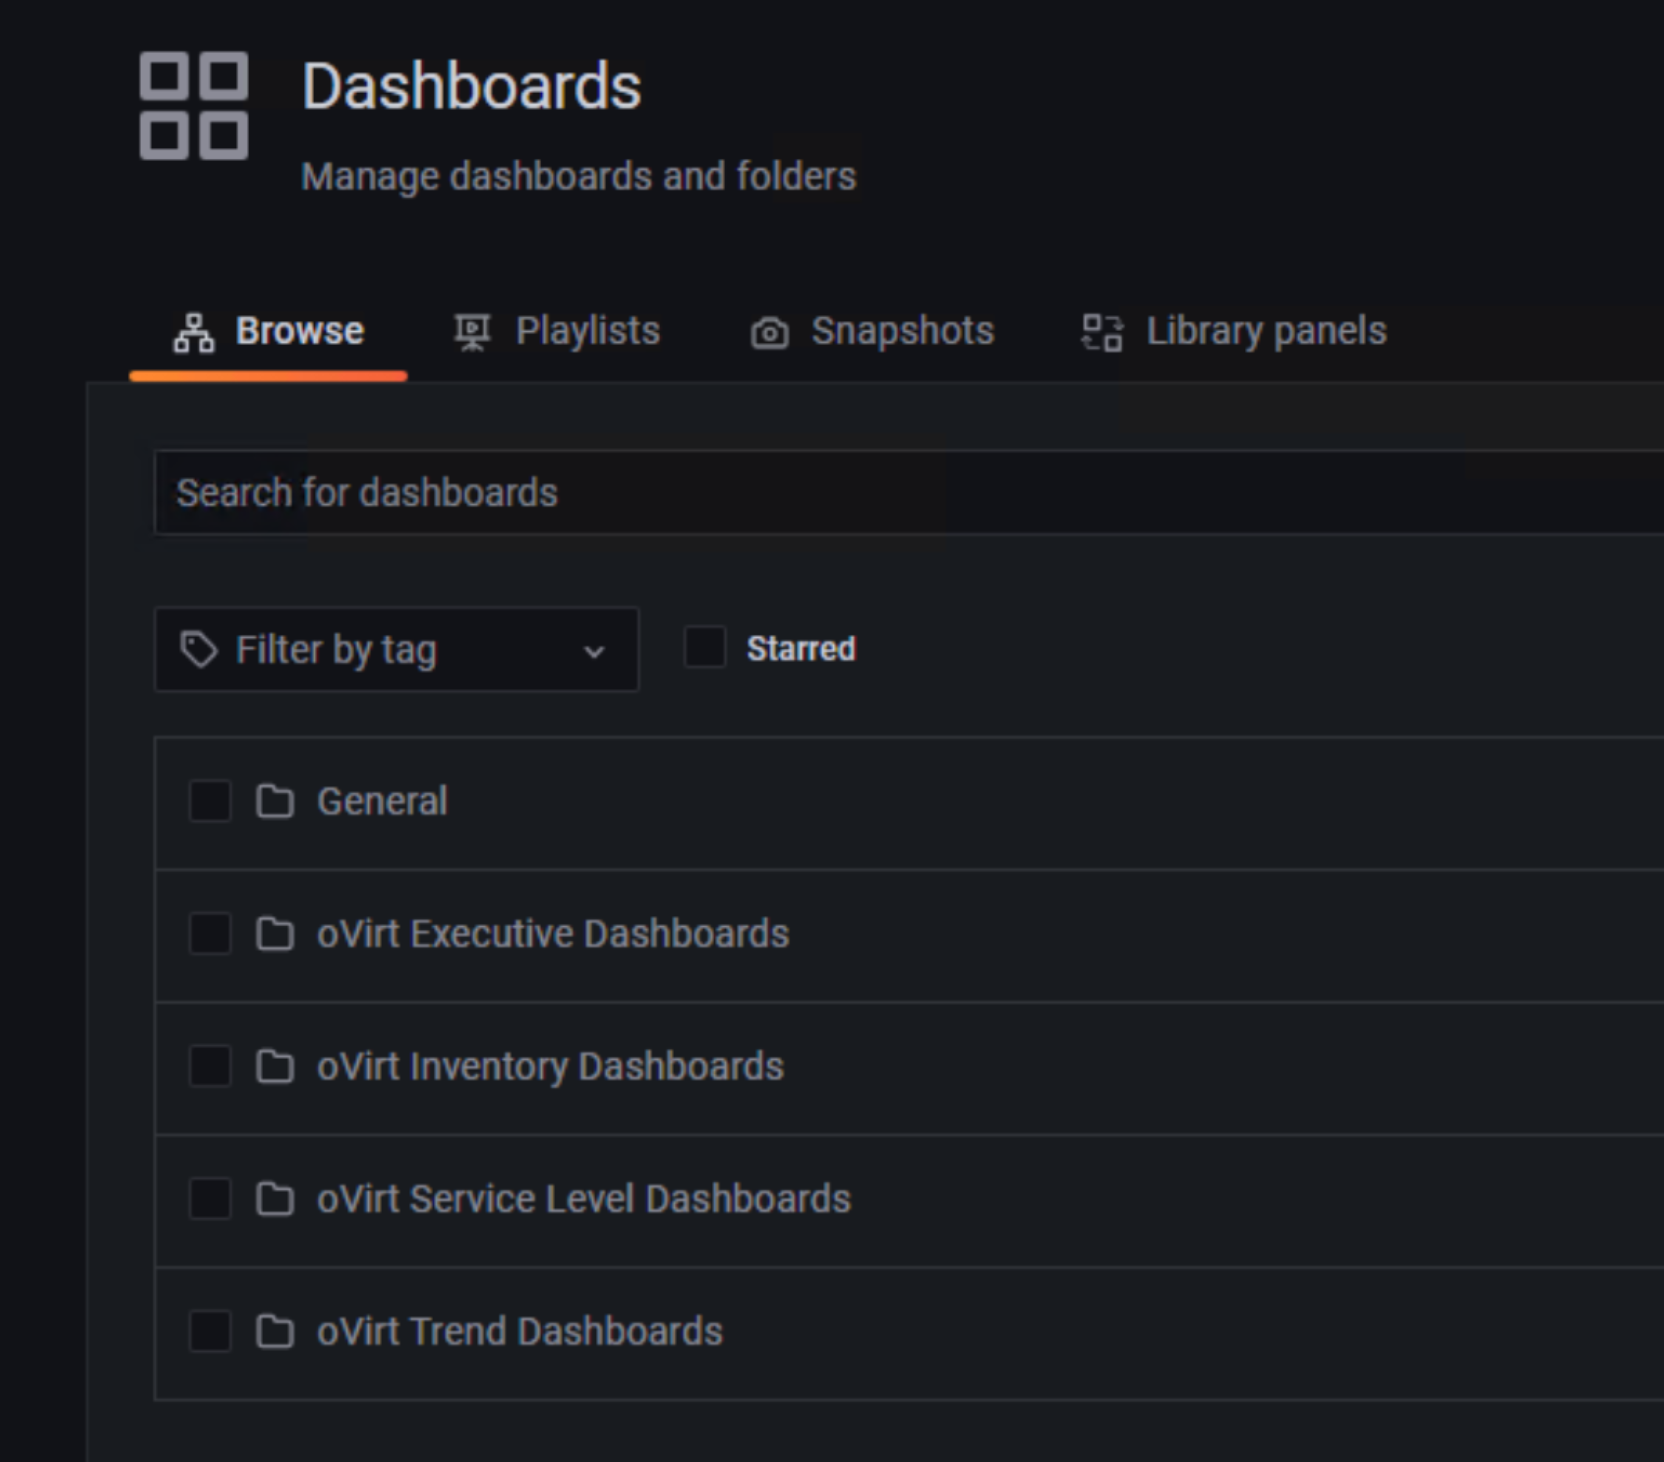 A screenshot showing the oVirt Dashboards screen.